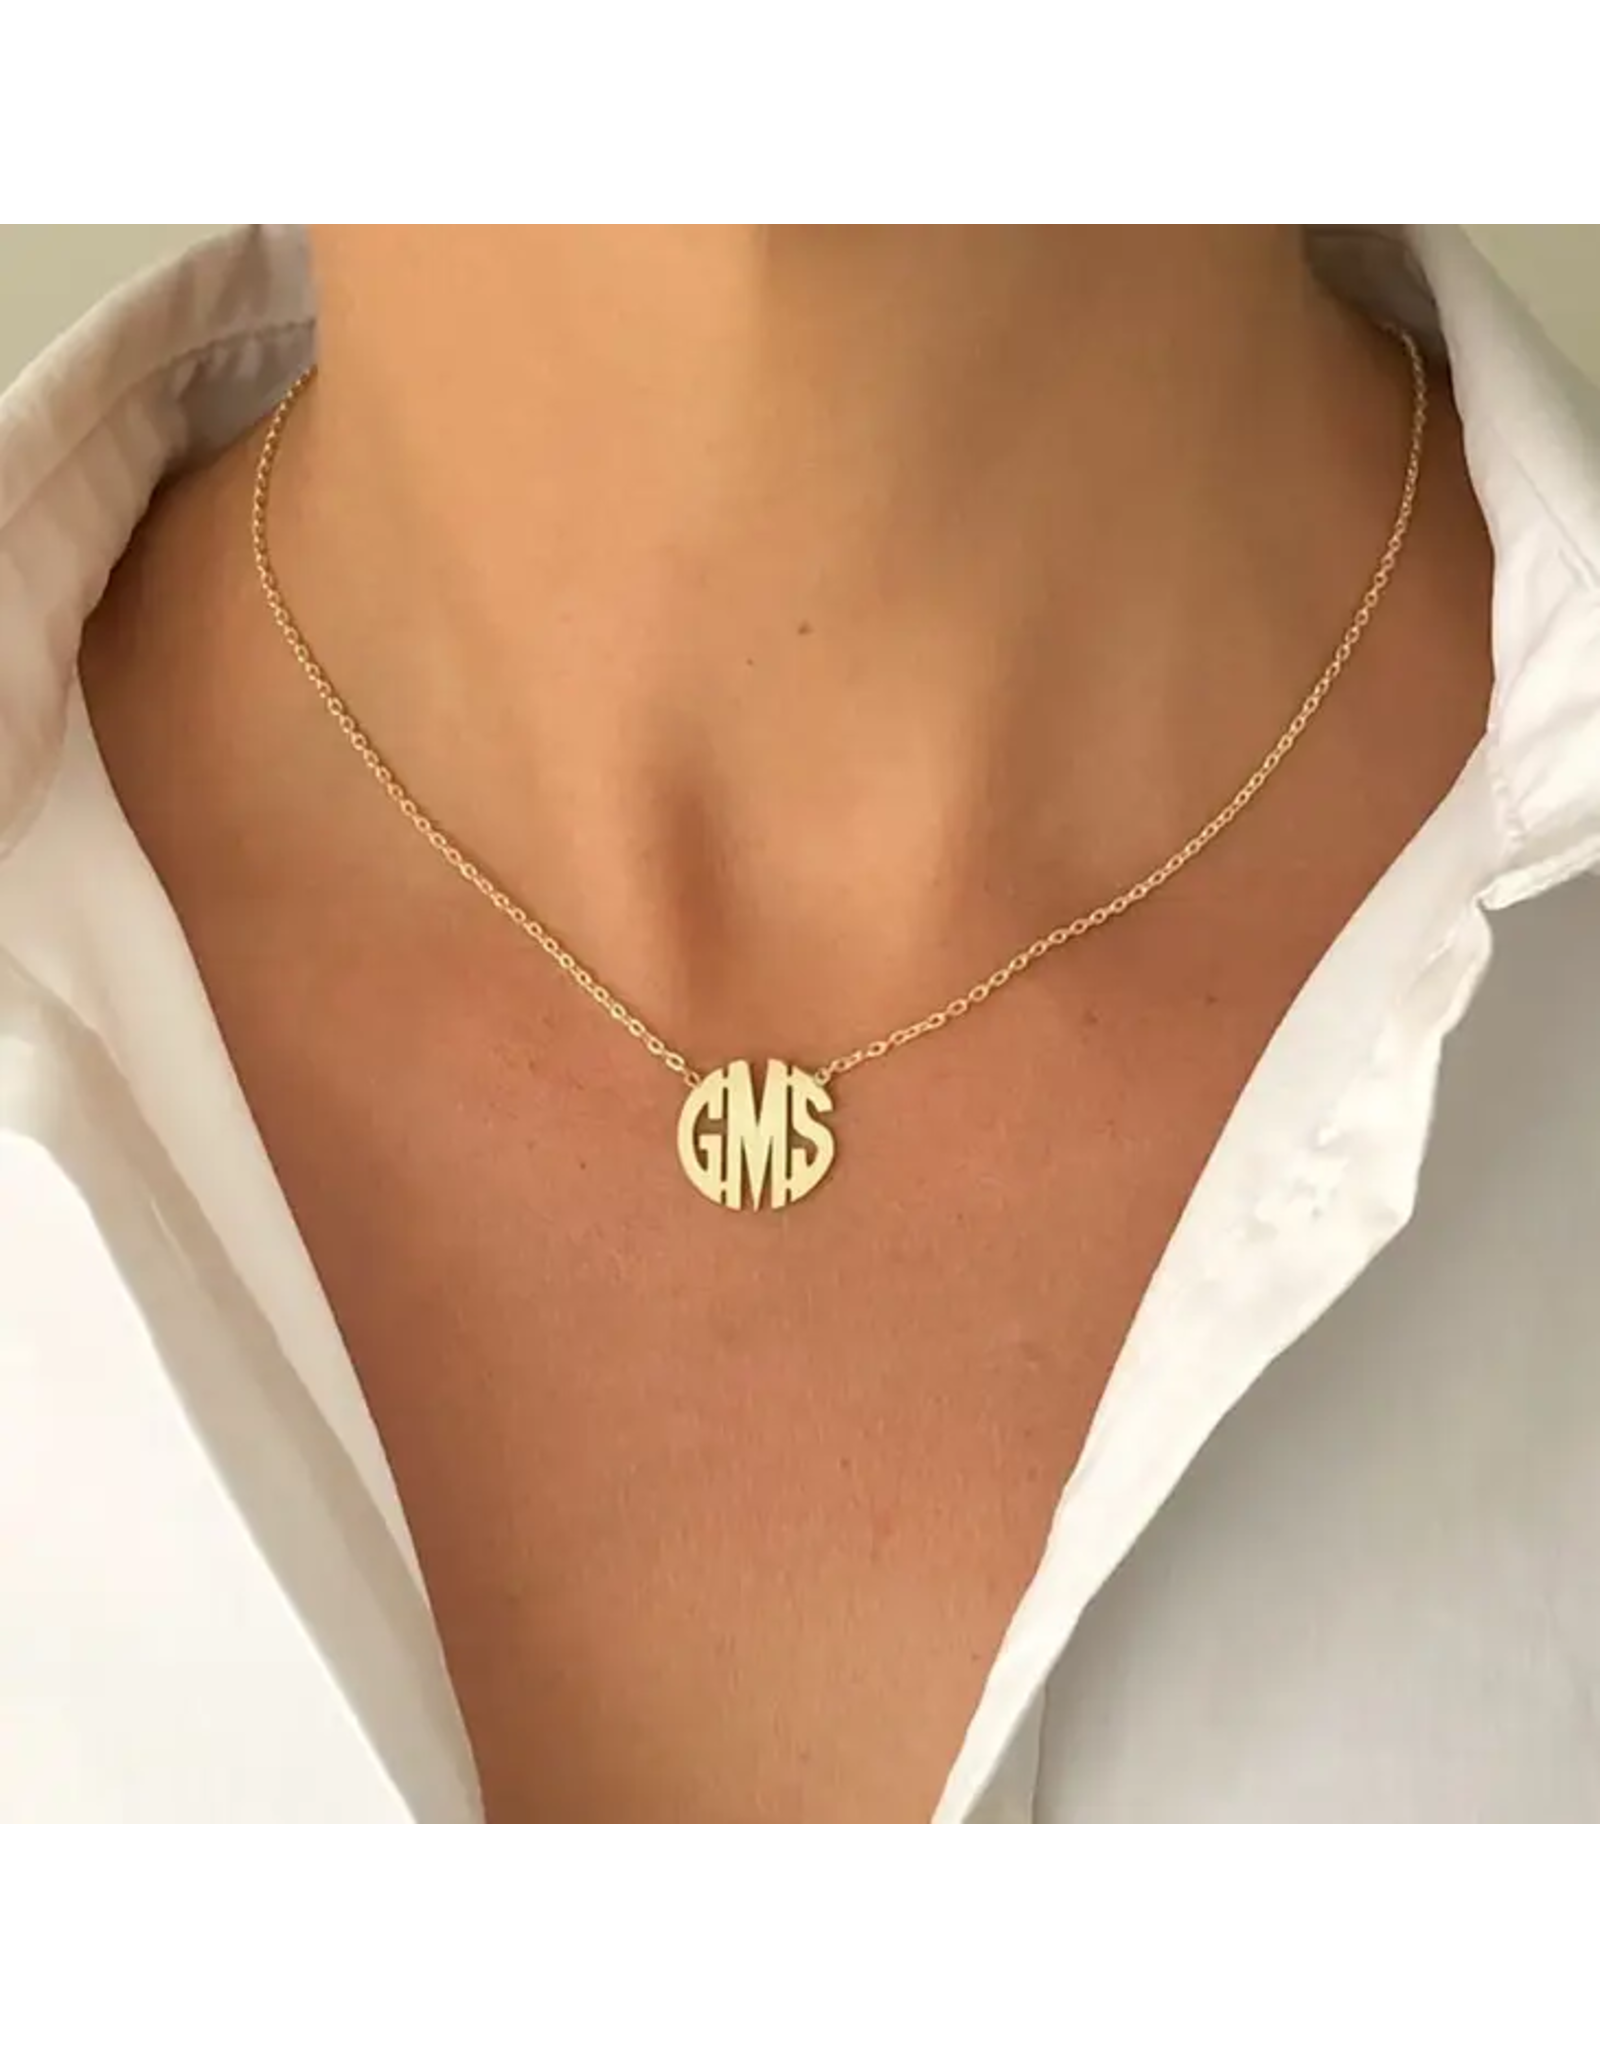 Joy Personalized Custom Monogram Necklace